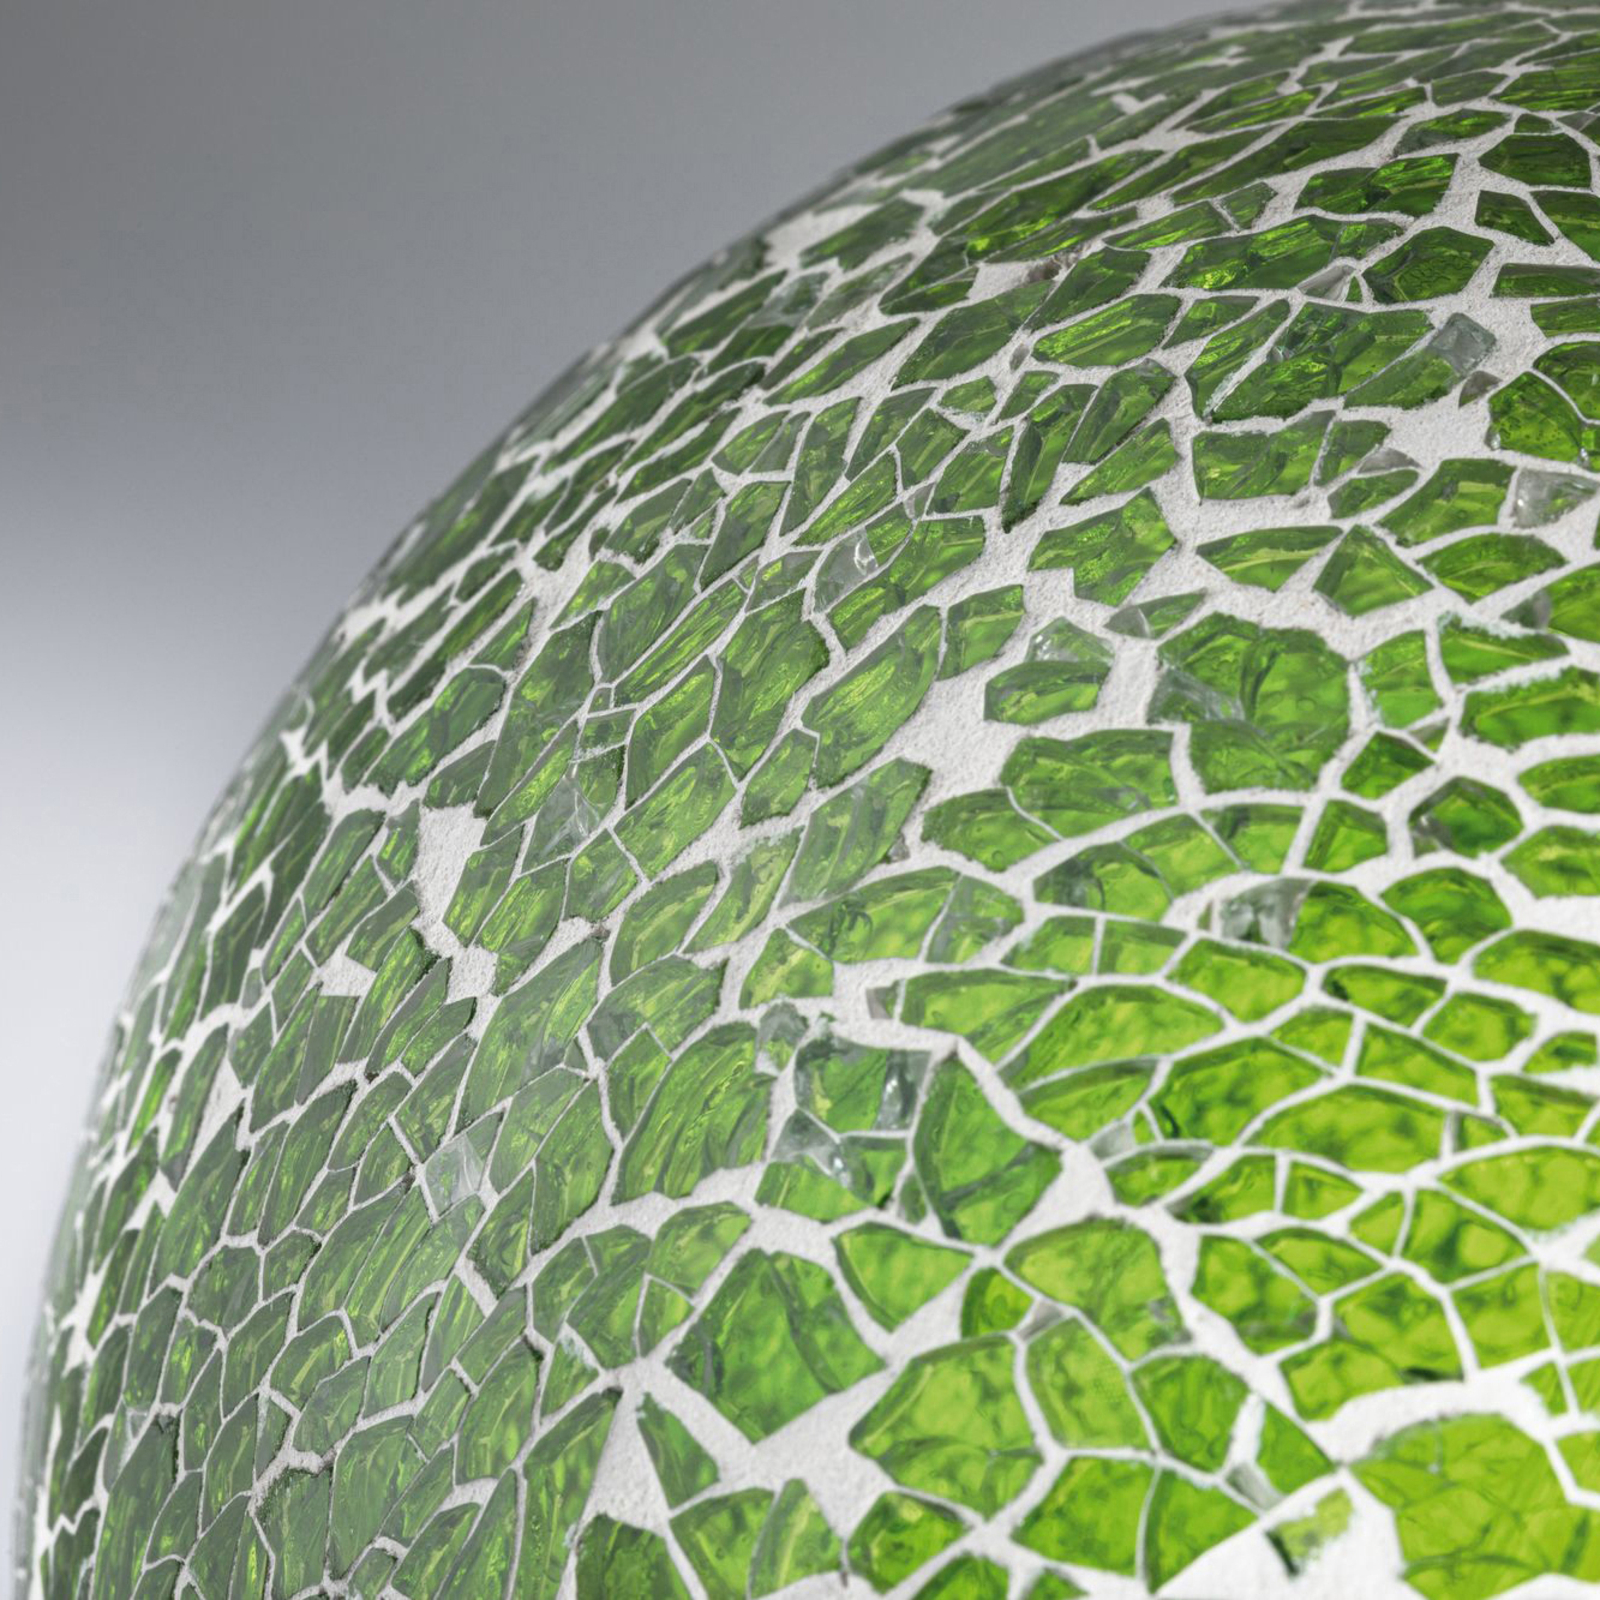 Paulmann E27 LED globe 5W Miracle Mosaic grønn